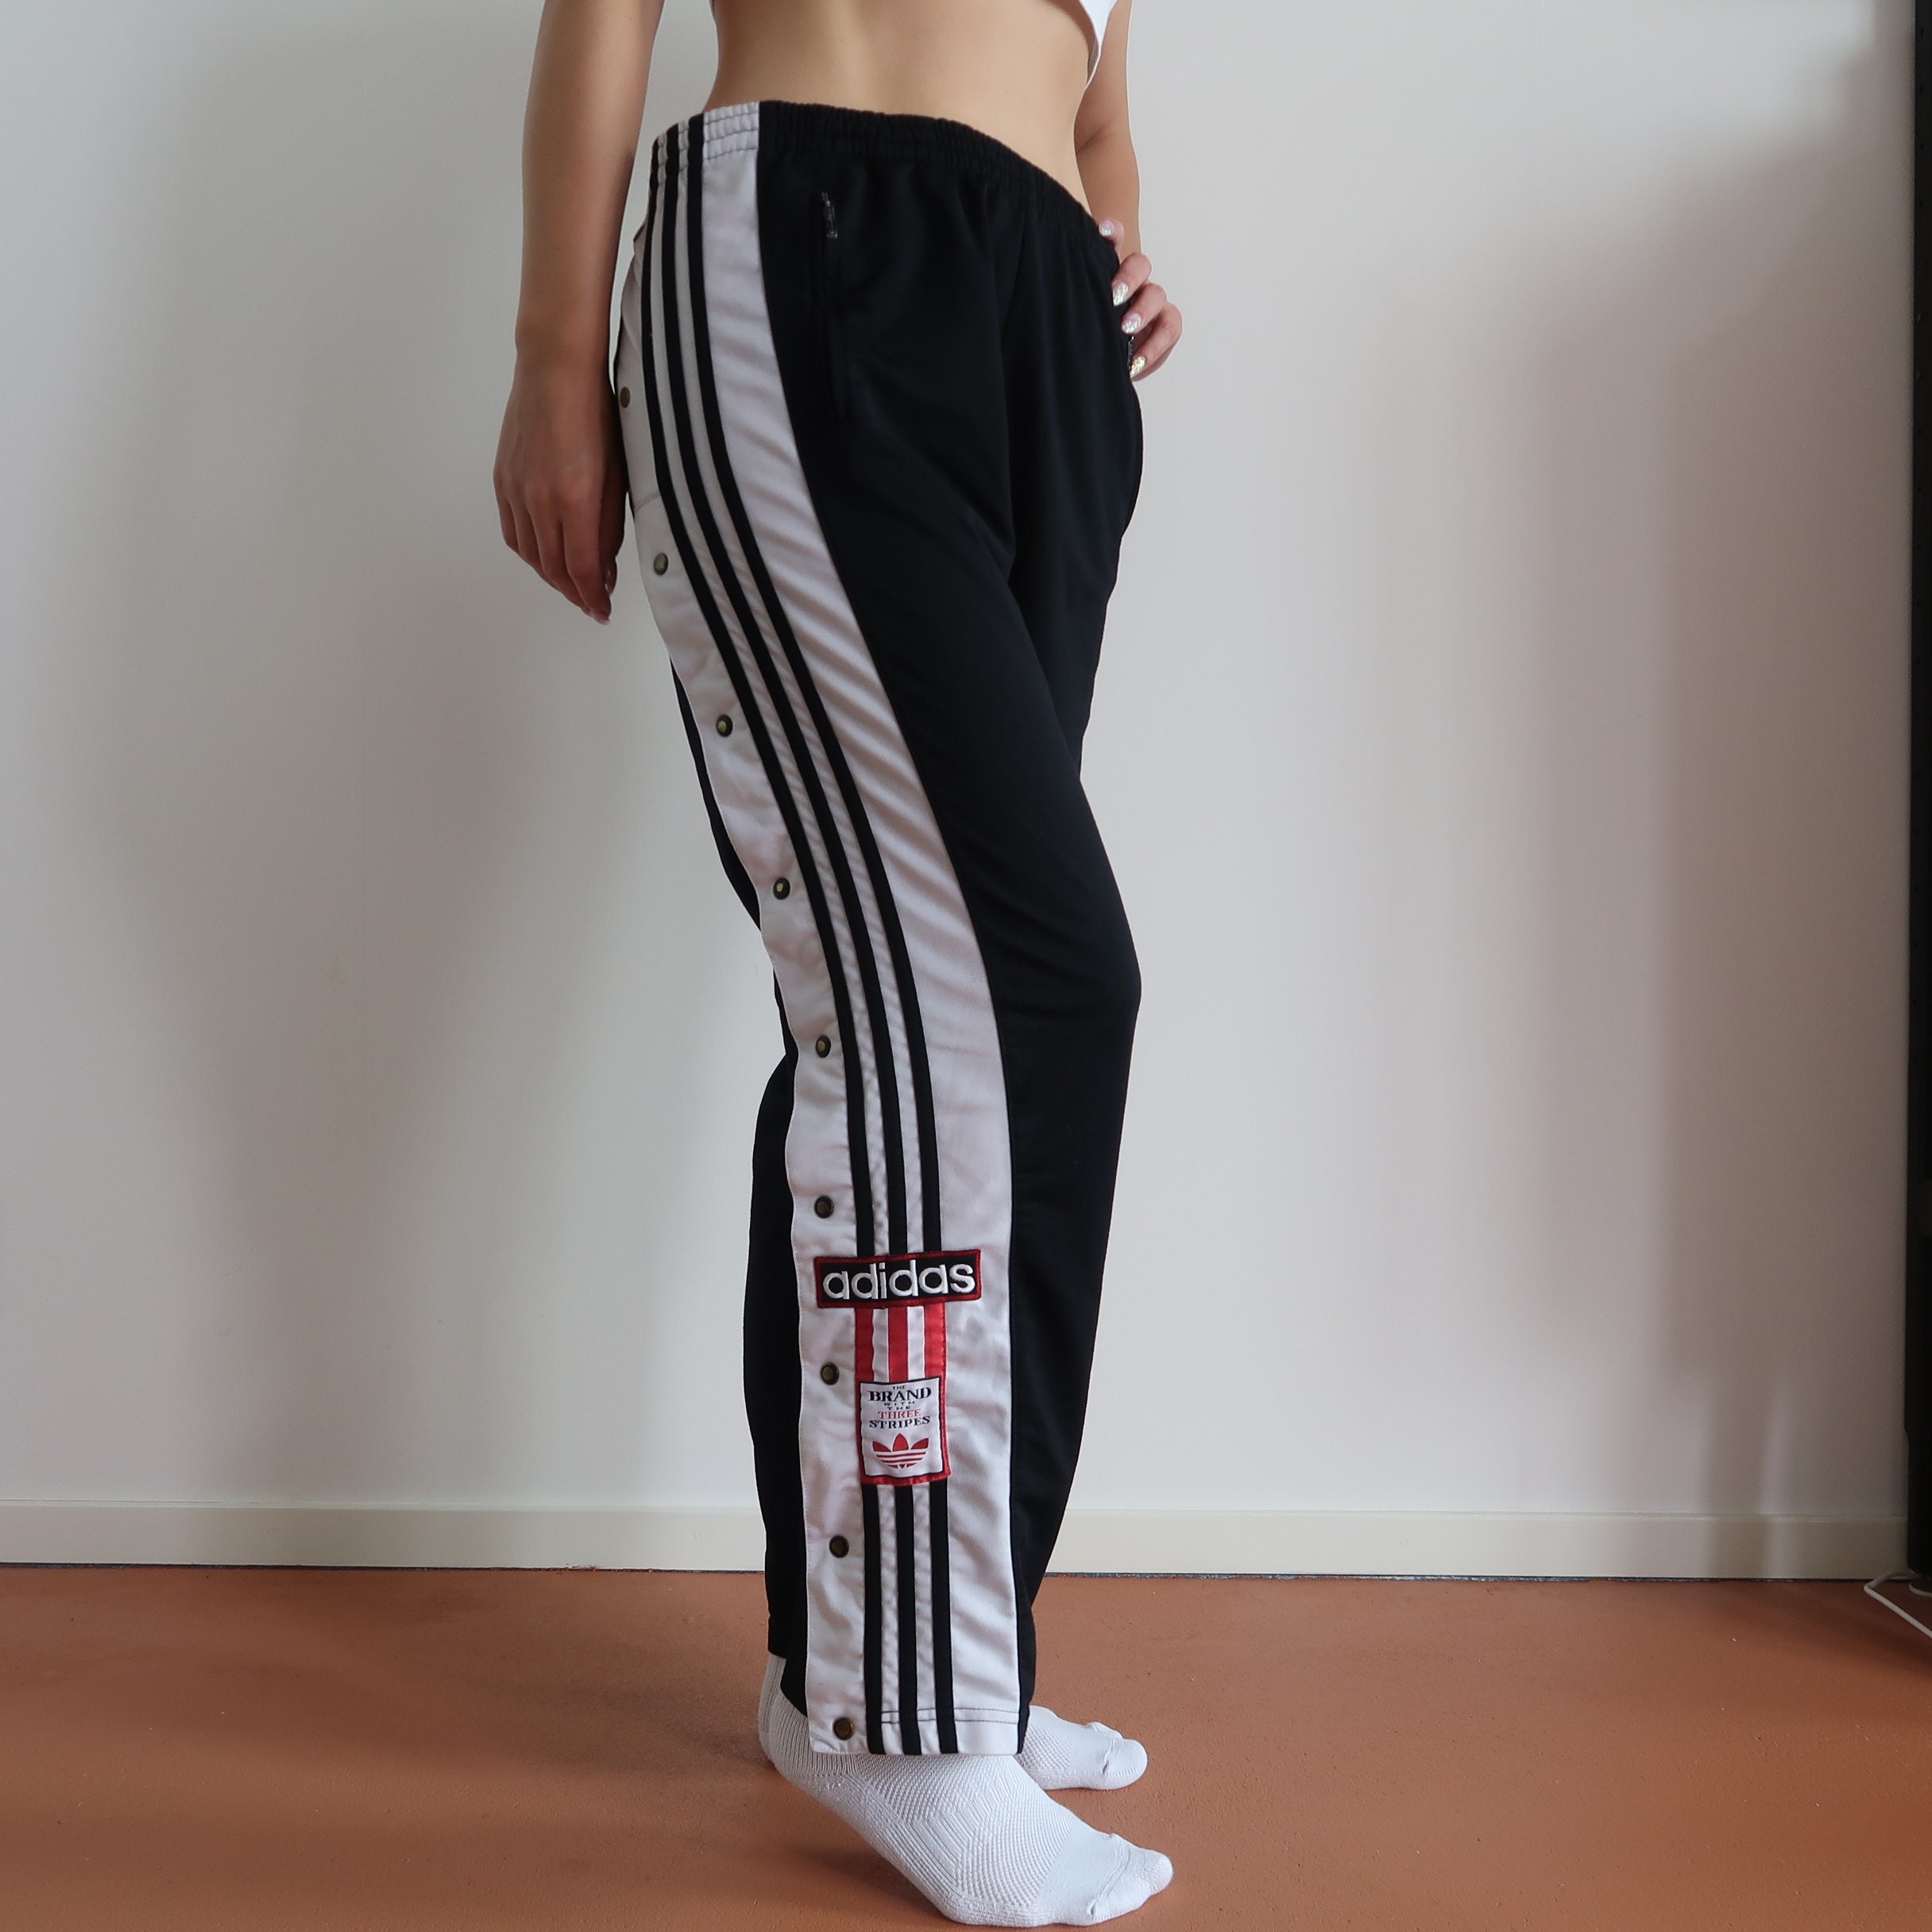 Acuerdo Formular Consulado Adidas 90s High Waisted Popper Track Pants Jogging Sweatpants - Etsy